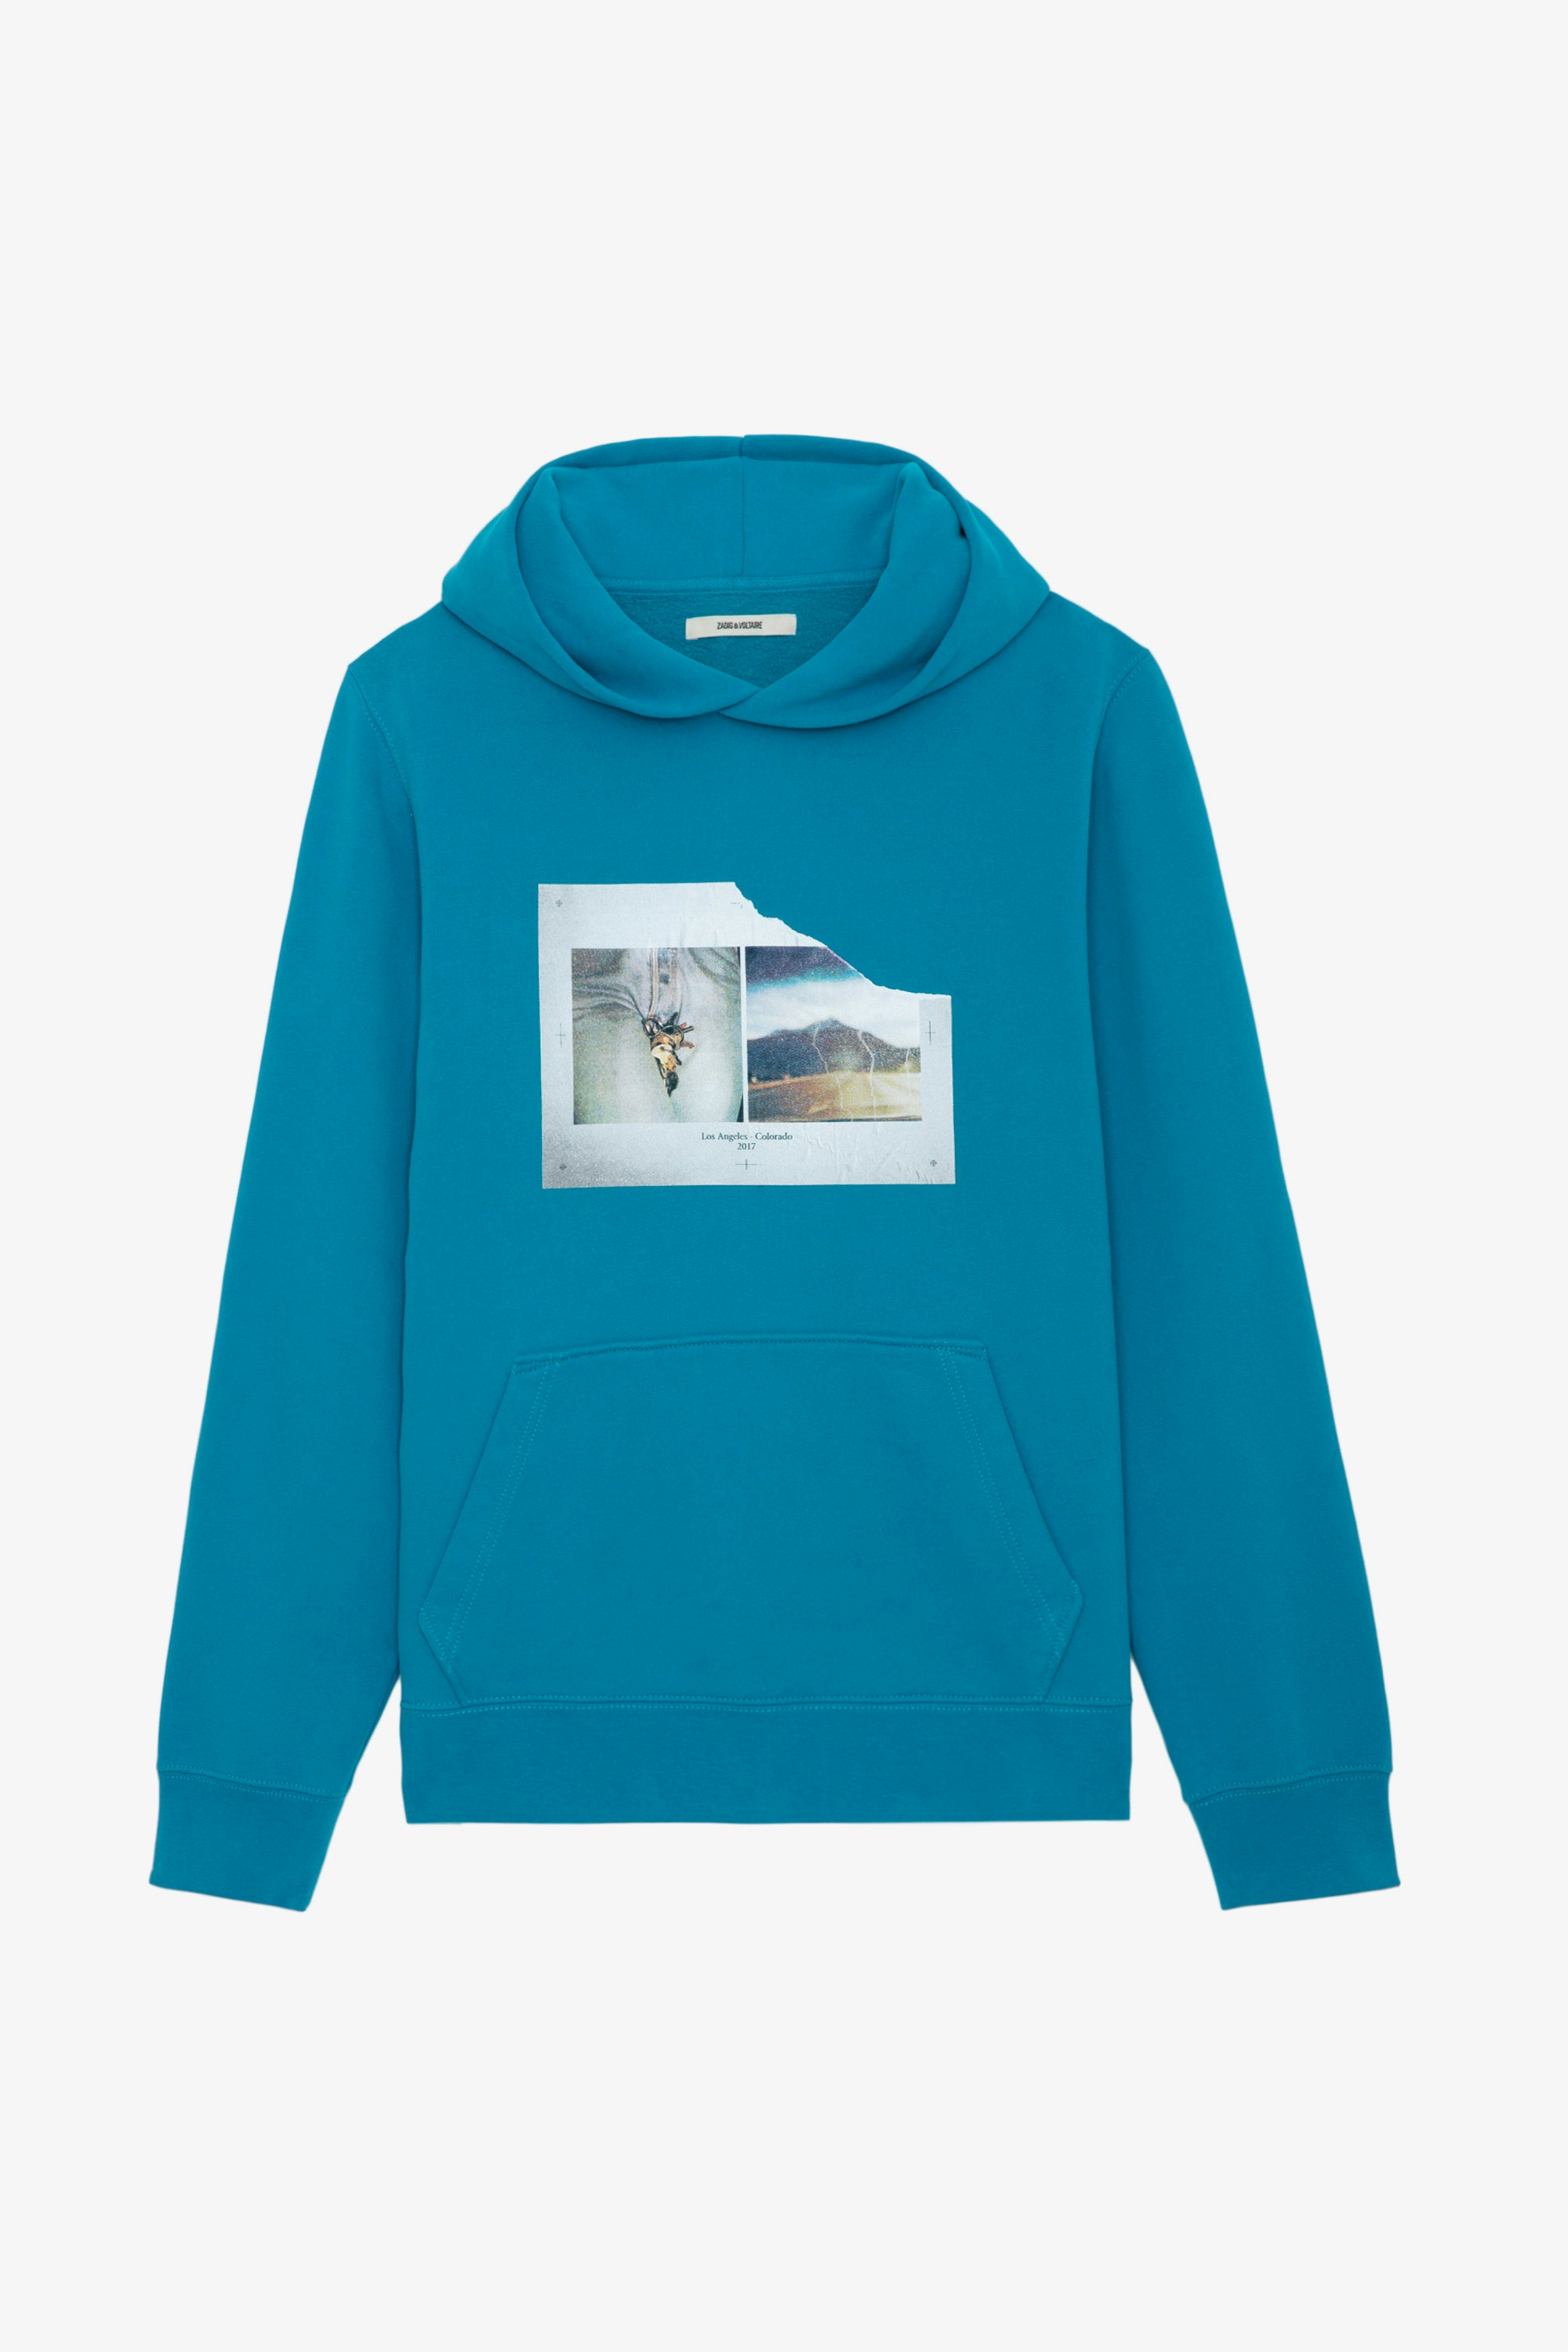 Sanchi Photoprint Sweatshirt - Teal blue long-sleeved hooded sweatshirt with photoprint and printed slogan.